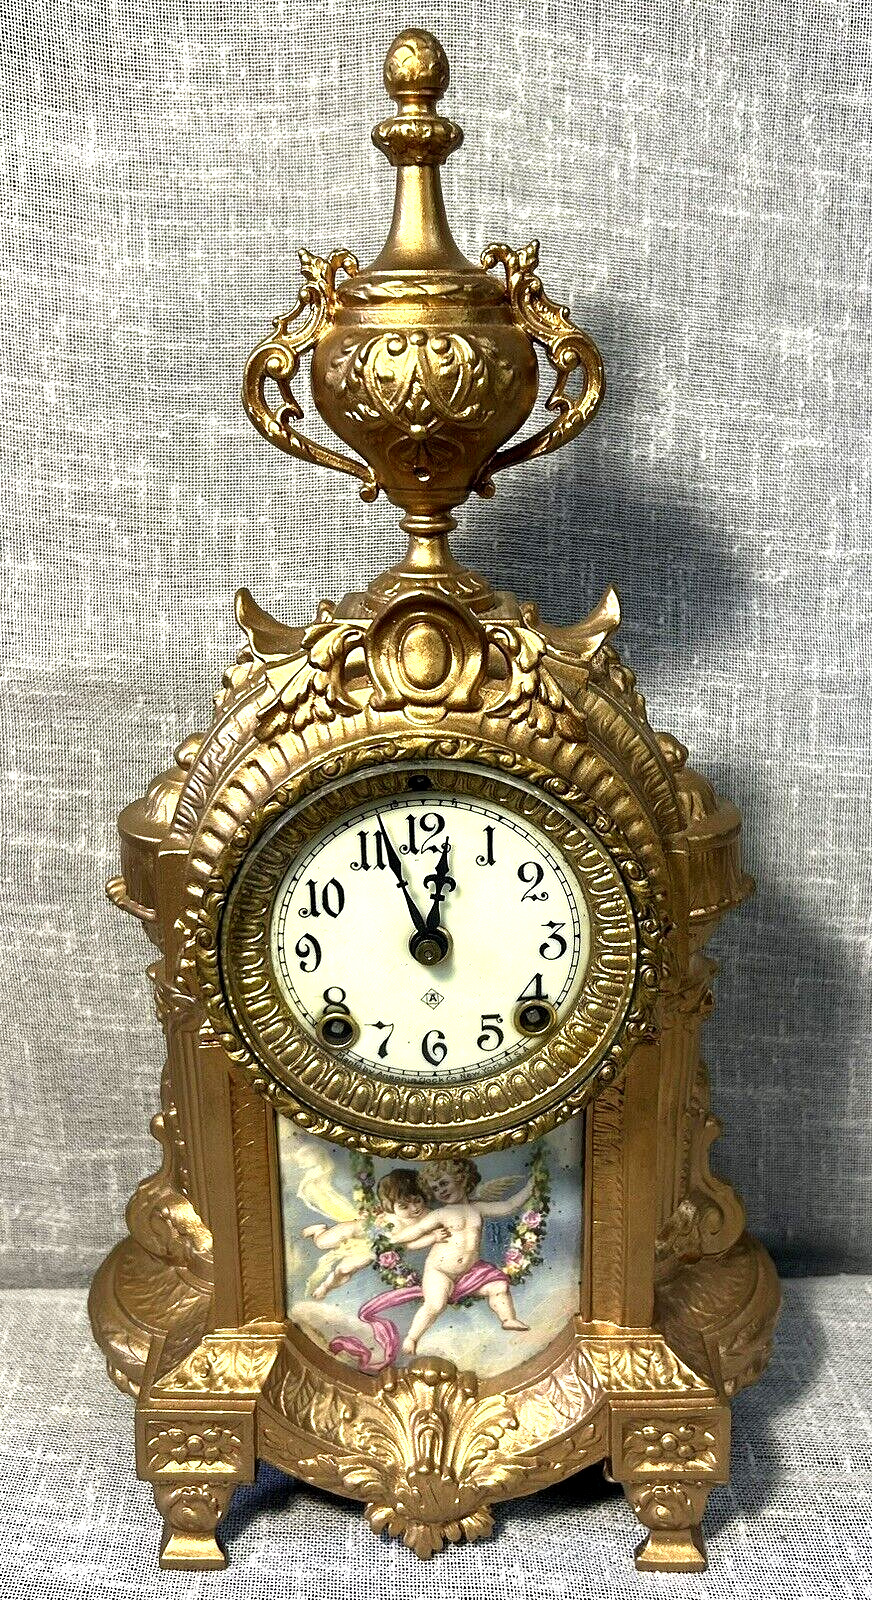 Antique Ansonia N.Y. Ornate Mantel Clock with Cherub Art Porcelain Panel